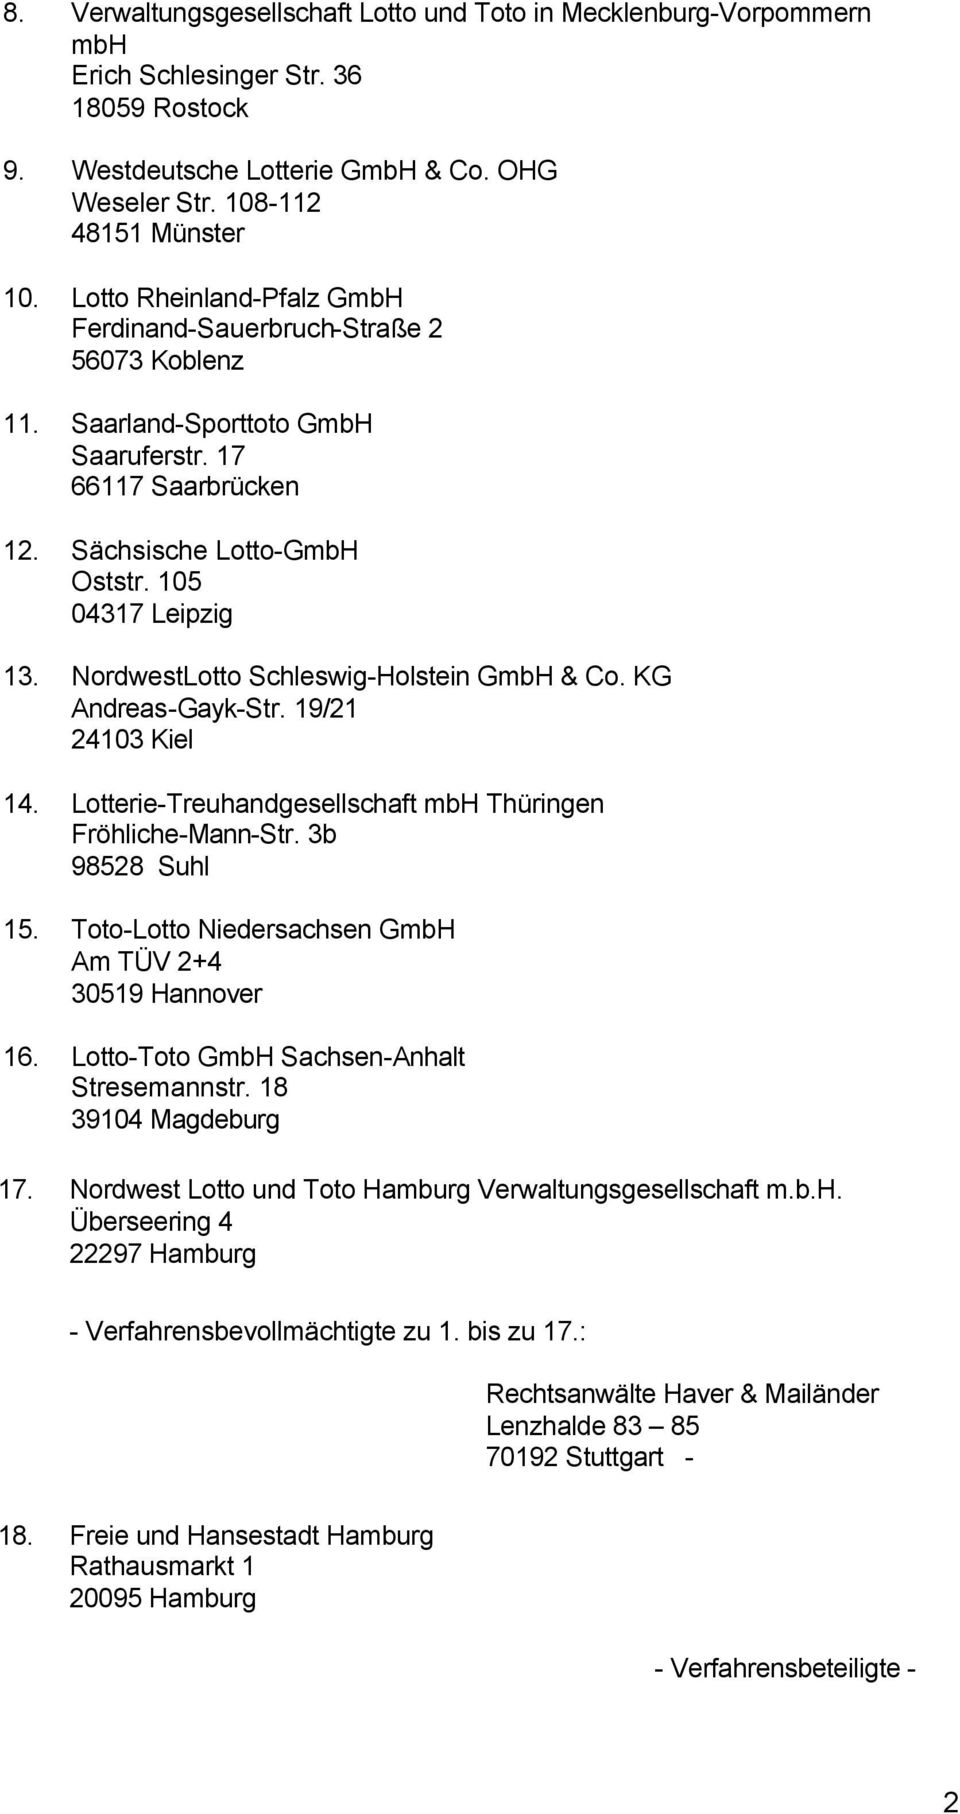 NordwestLotto Schleswig-Holstein GmbH & Co. KG Andreas-Gayk-Str. 19/21 24103 Kiel 14. Lotterie-Treuhandgesellschaft mbh Thüringen Fröhliche-Mann-Str. 3b 98528 Suhl 15.